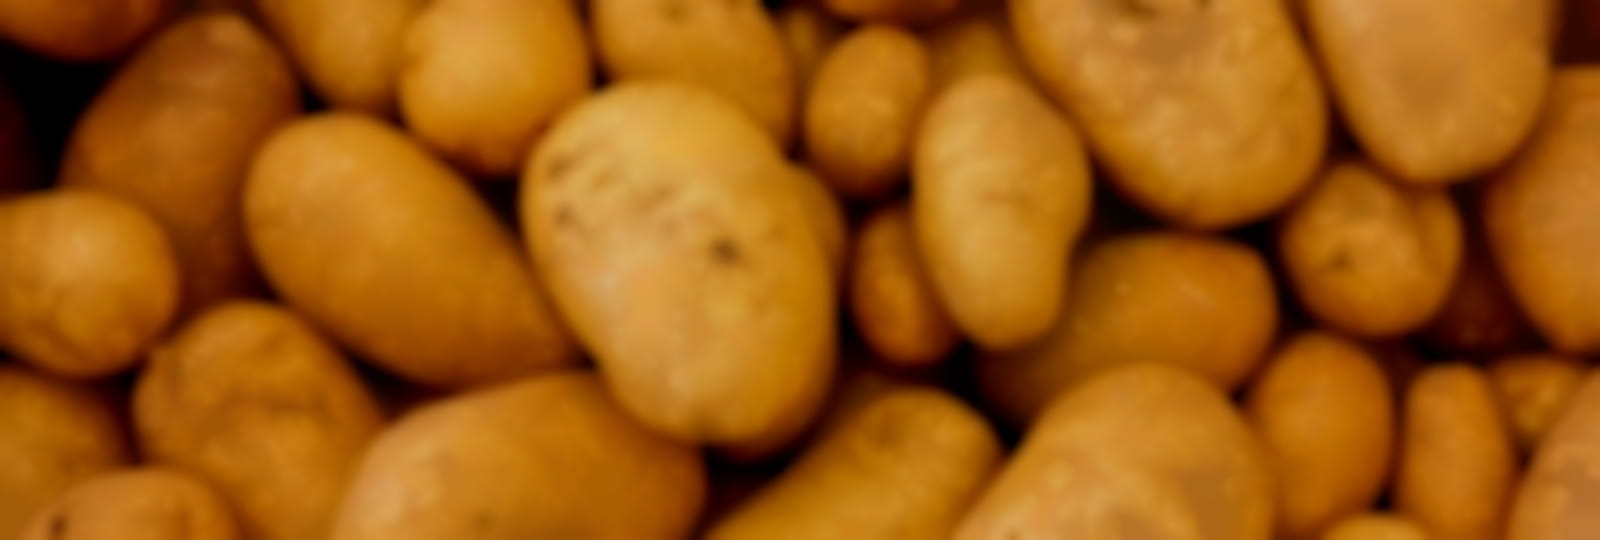 potatoes-411975_1920